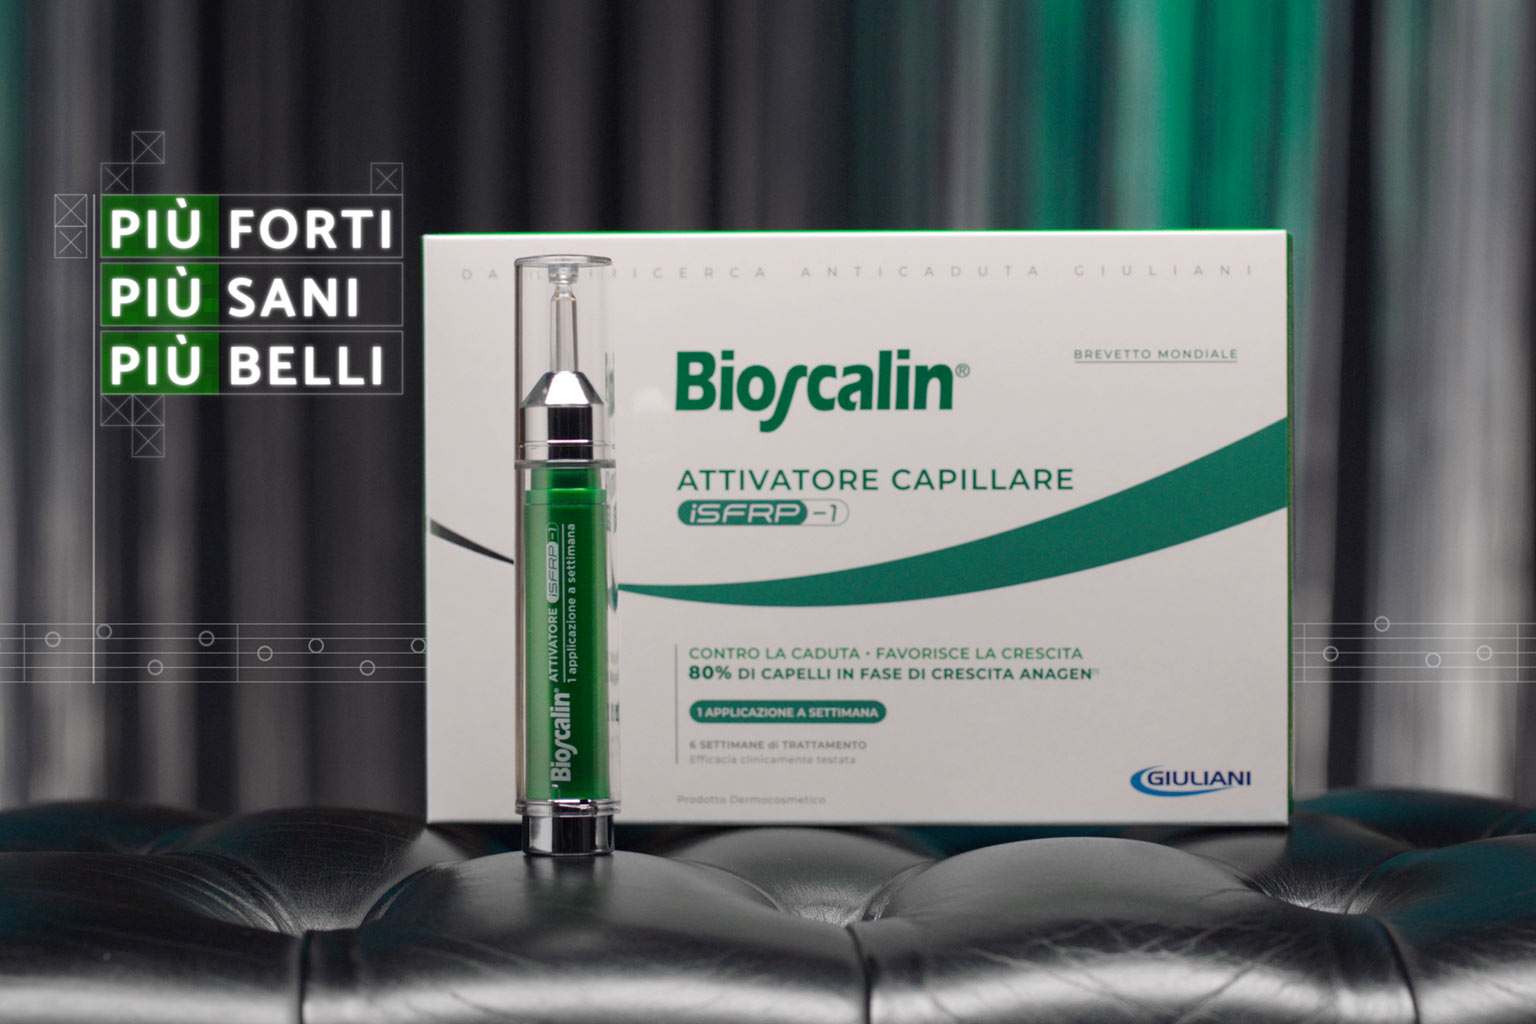 Bioscalin Attivatore Capillare packshot